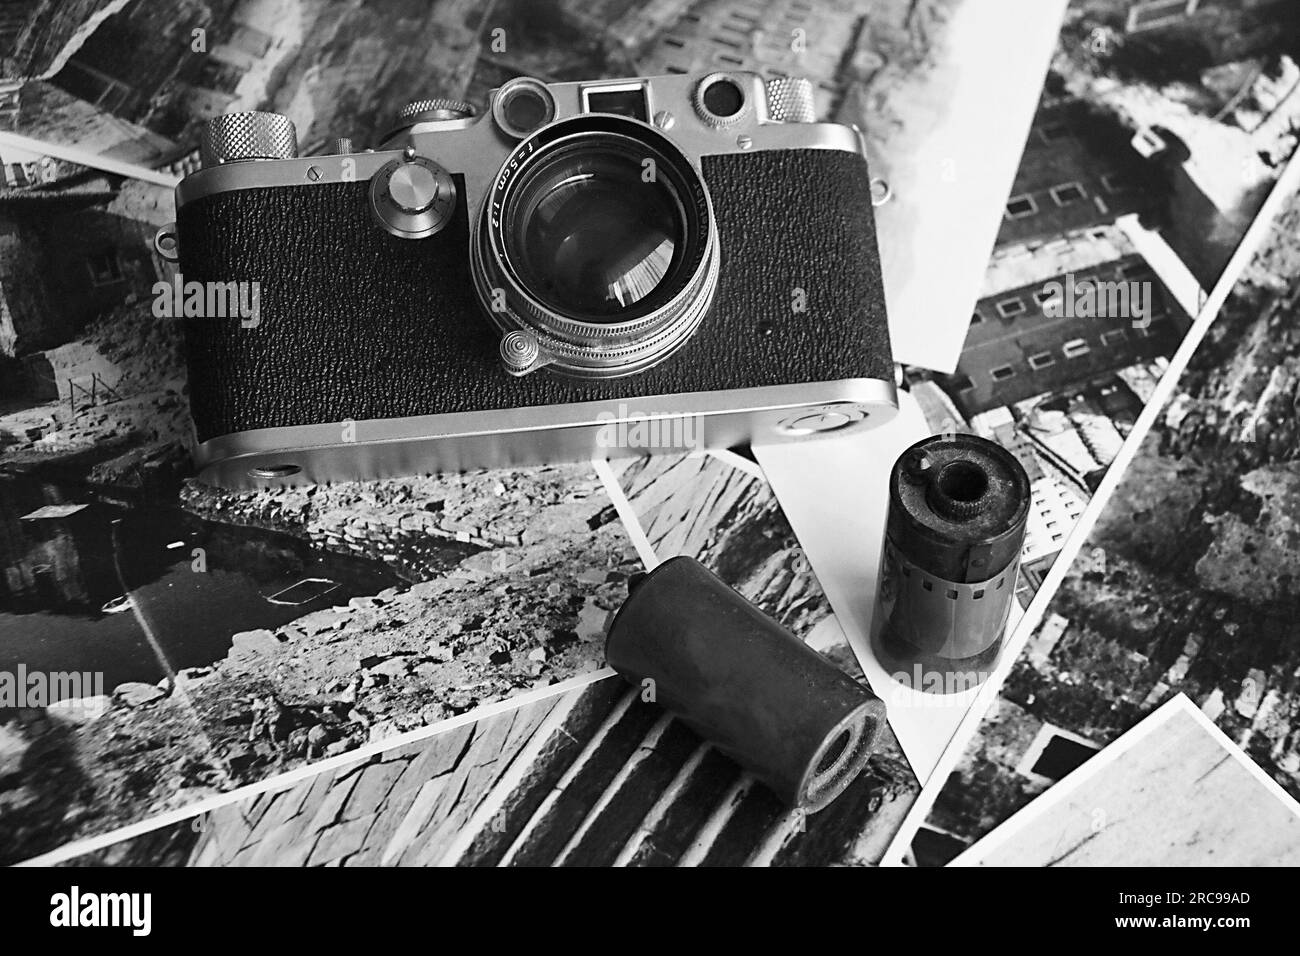 antigua cámara analógica del siglo pasado Fotografía de stock - Alamy